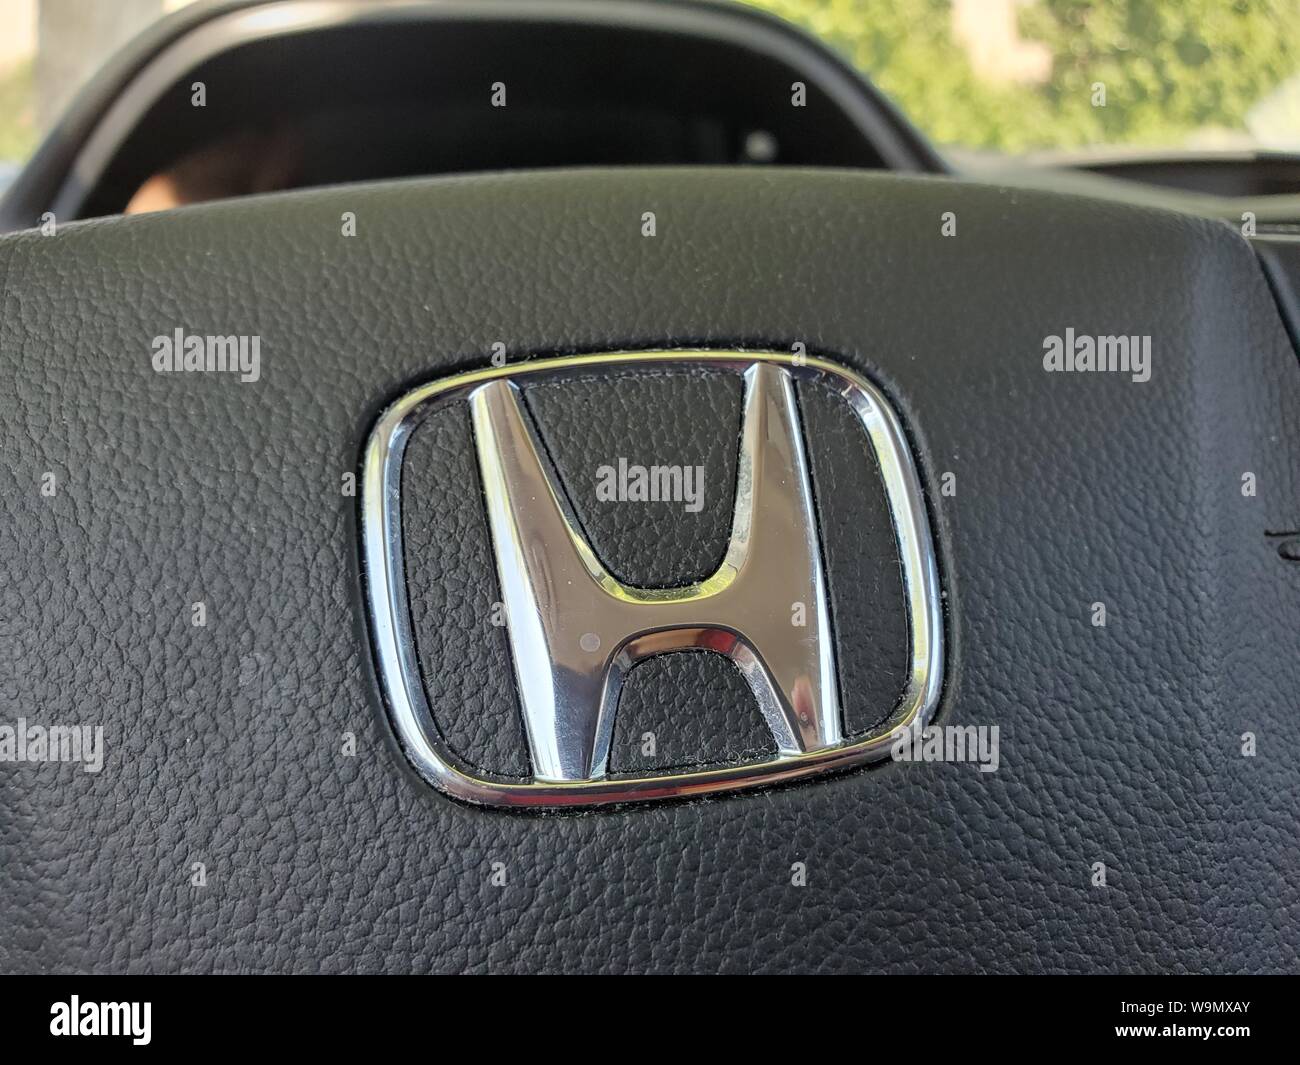 Honda Logo am Lenkrad, SRS Airbag und horn Stockfotografie - Alamy